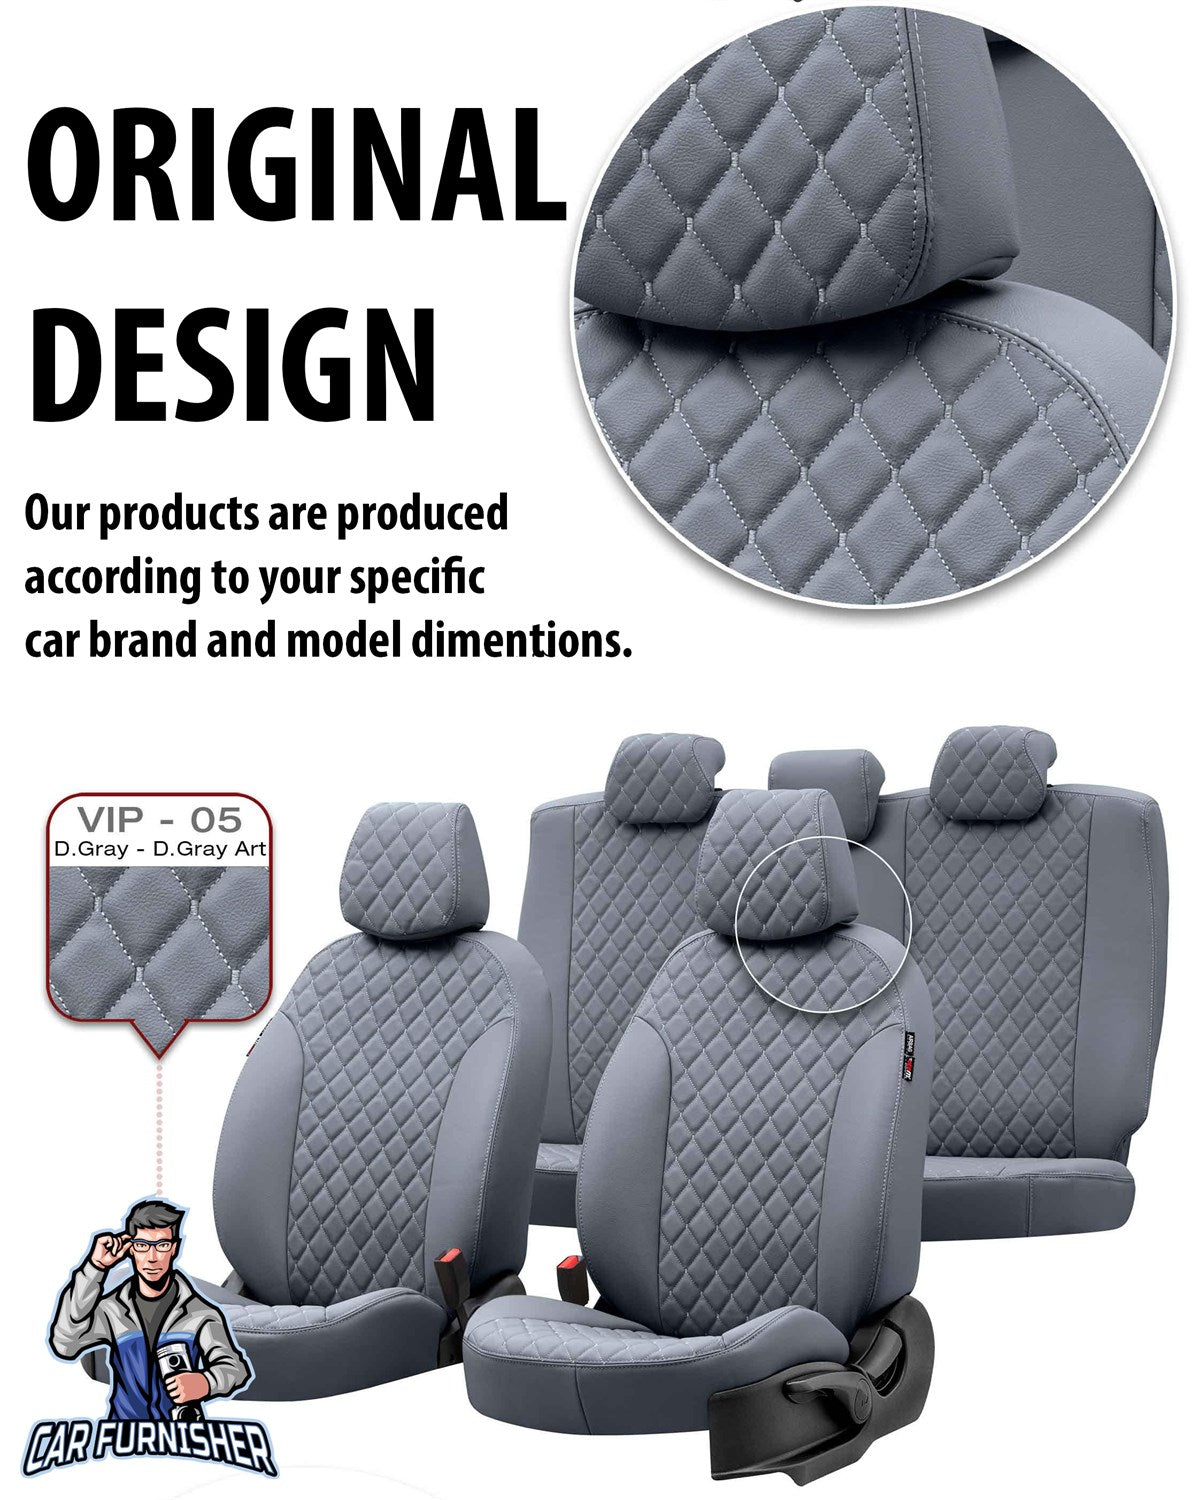 Fiat Albea Seat Covers Madrid Leather Design Blue Leather